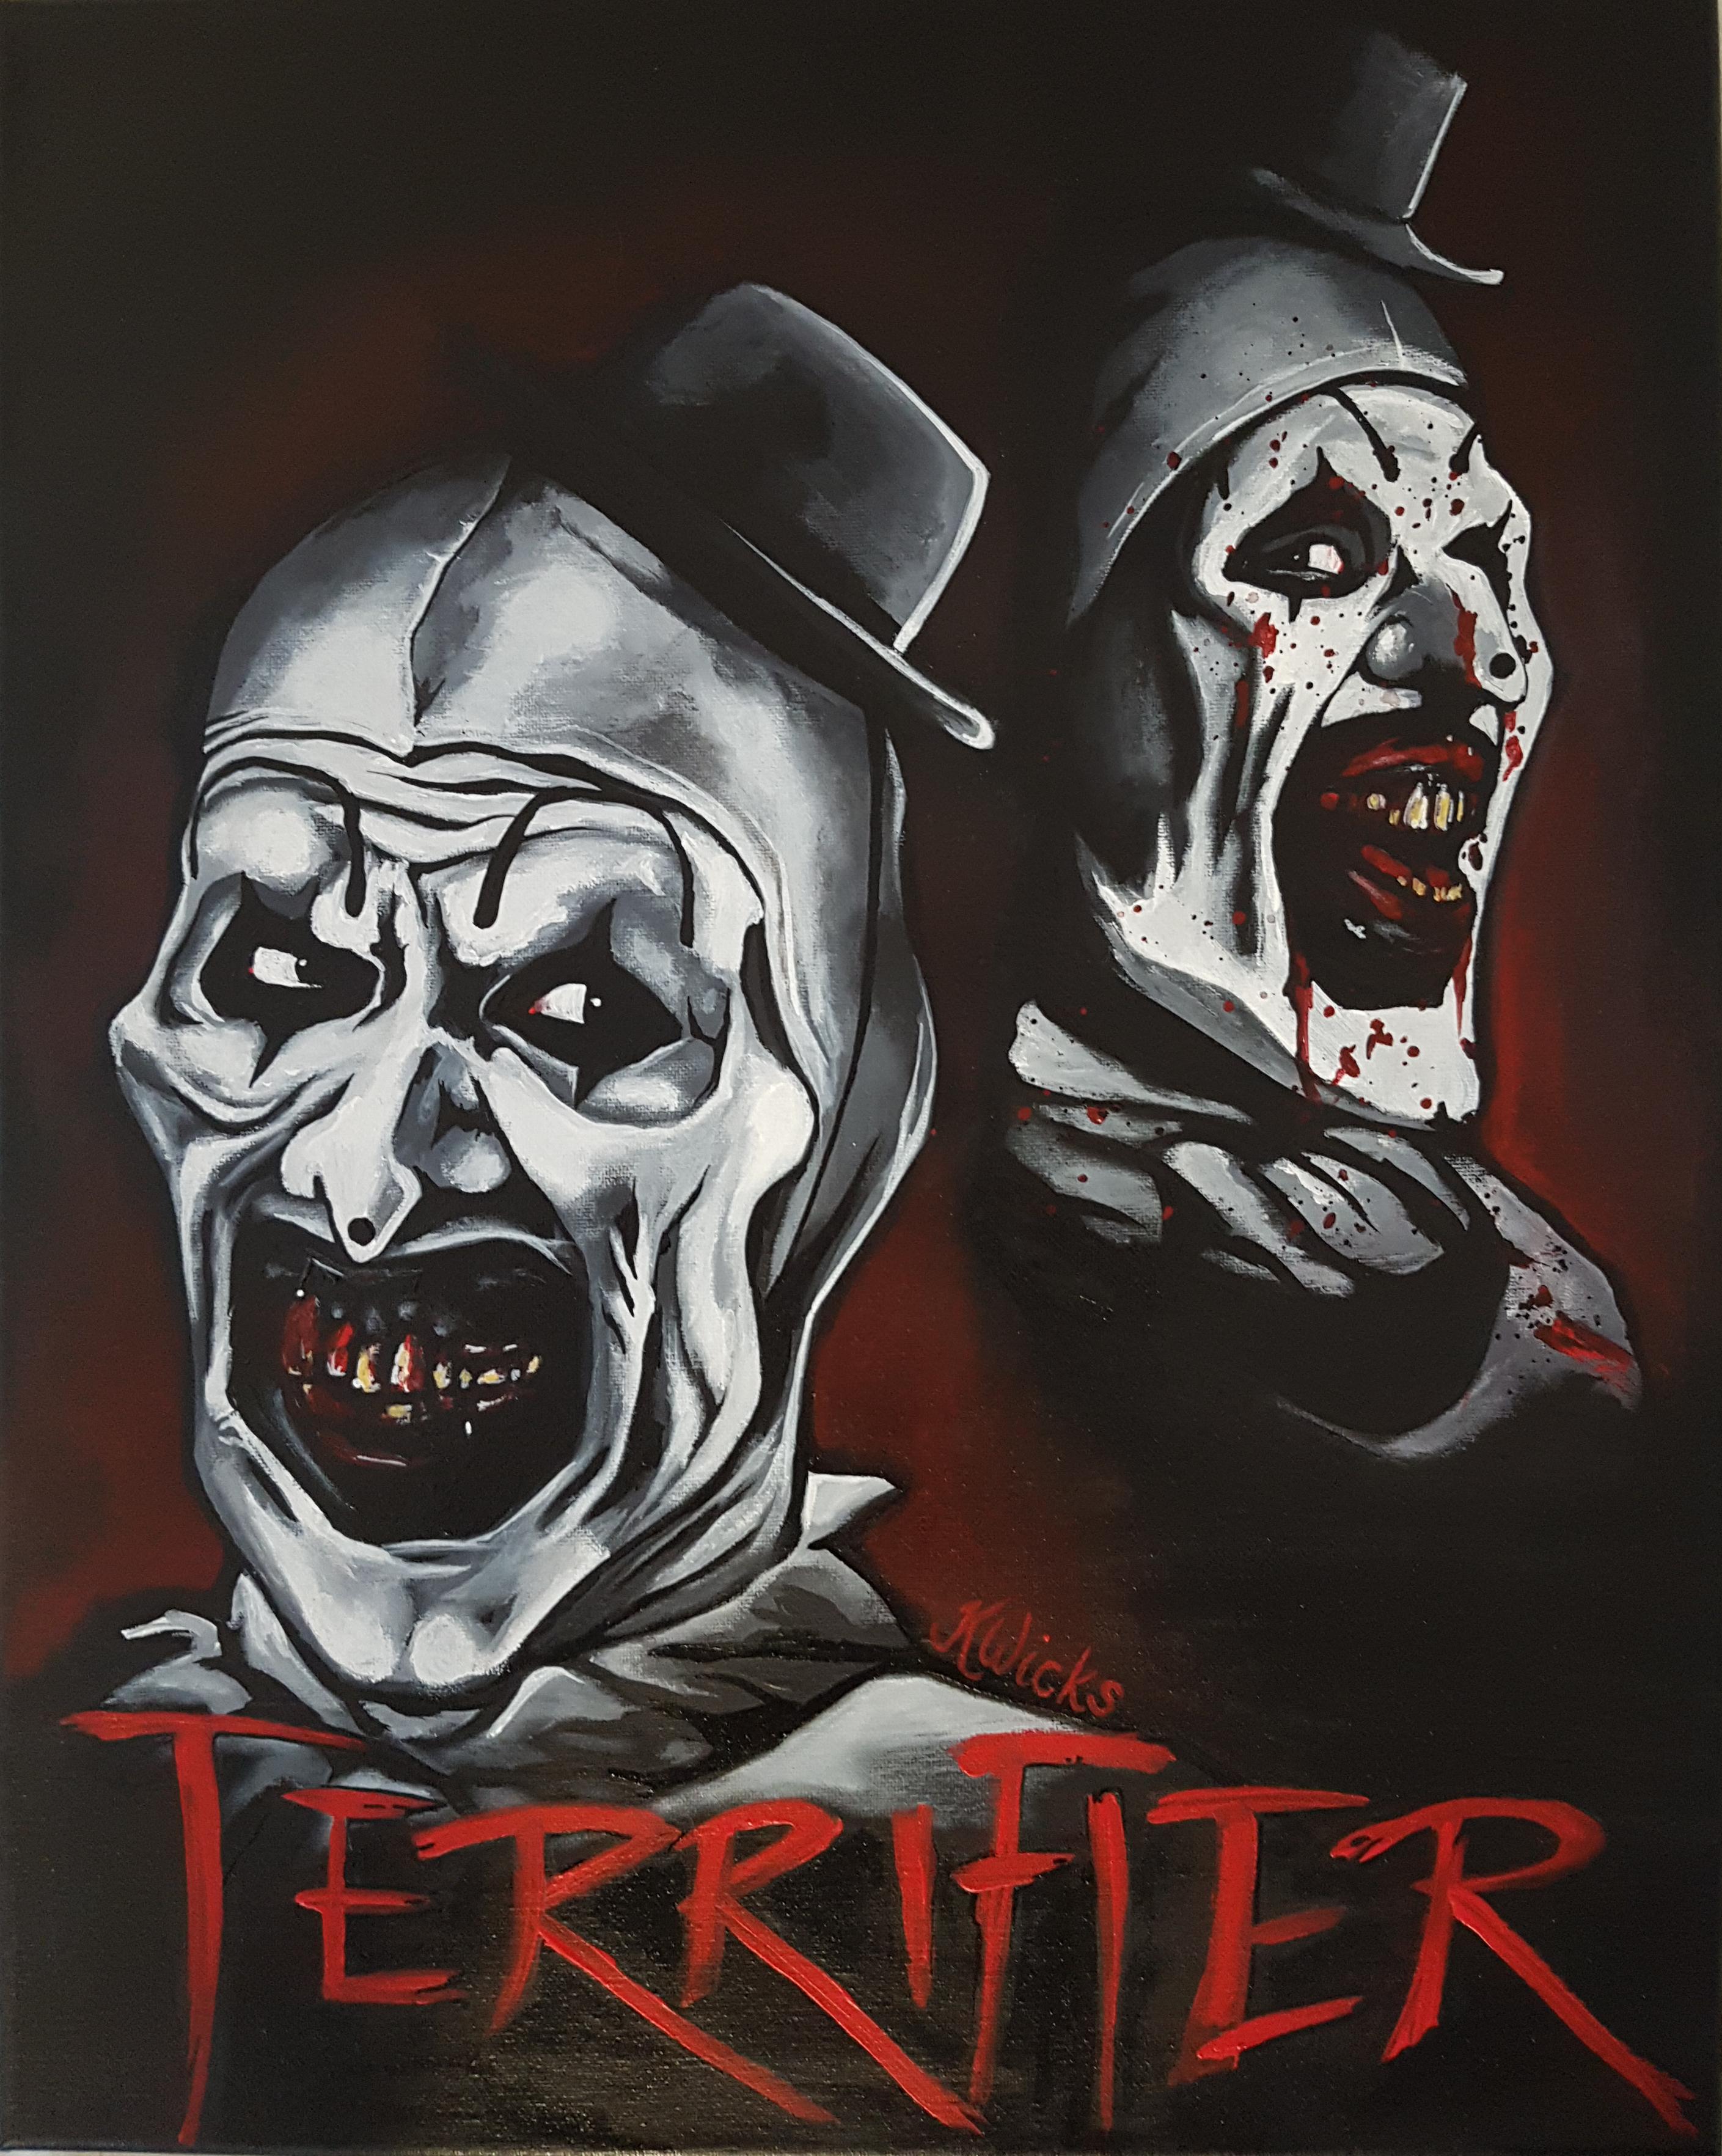 Art The Clown! Getting Excited For Terrifier 2!, R Horror_art